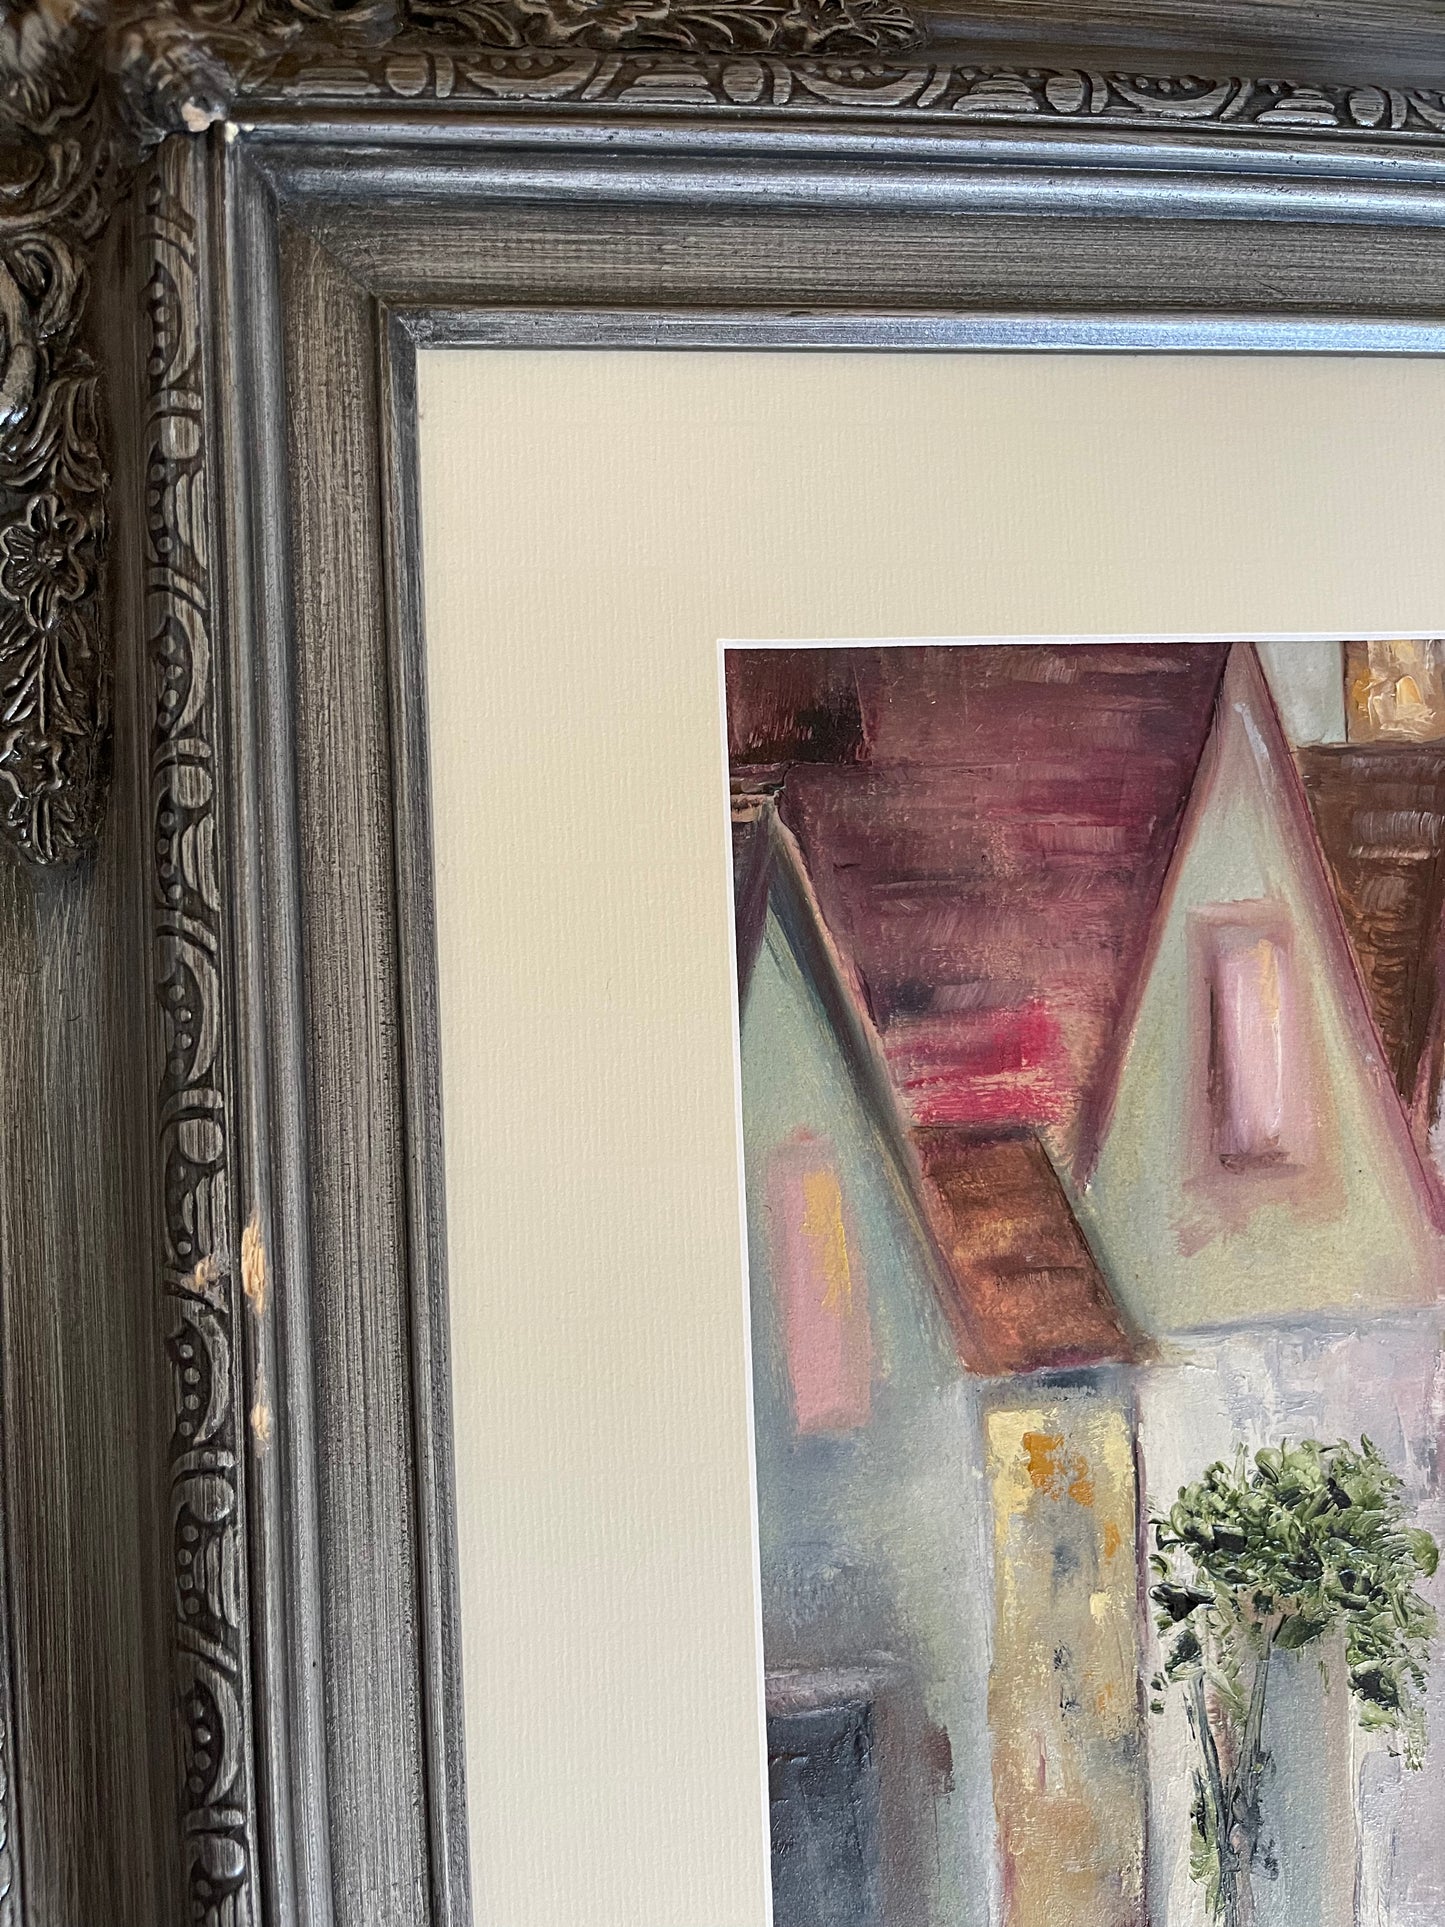 Arlington Row Bibury-Original Cotswold Oil Painting Framed